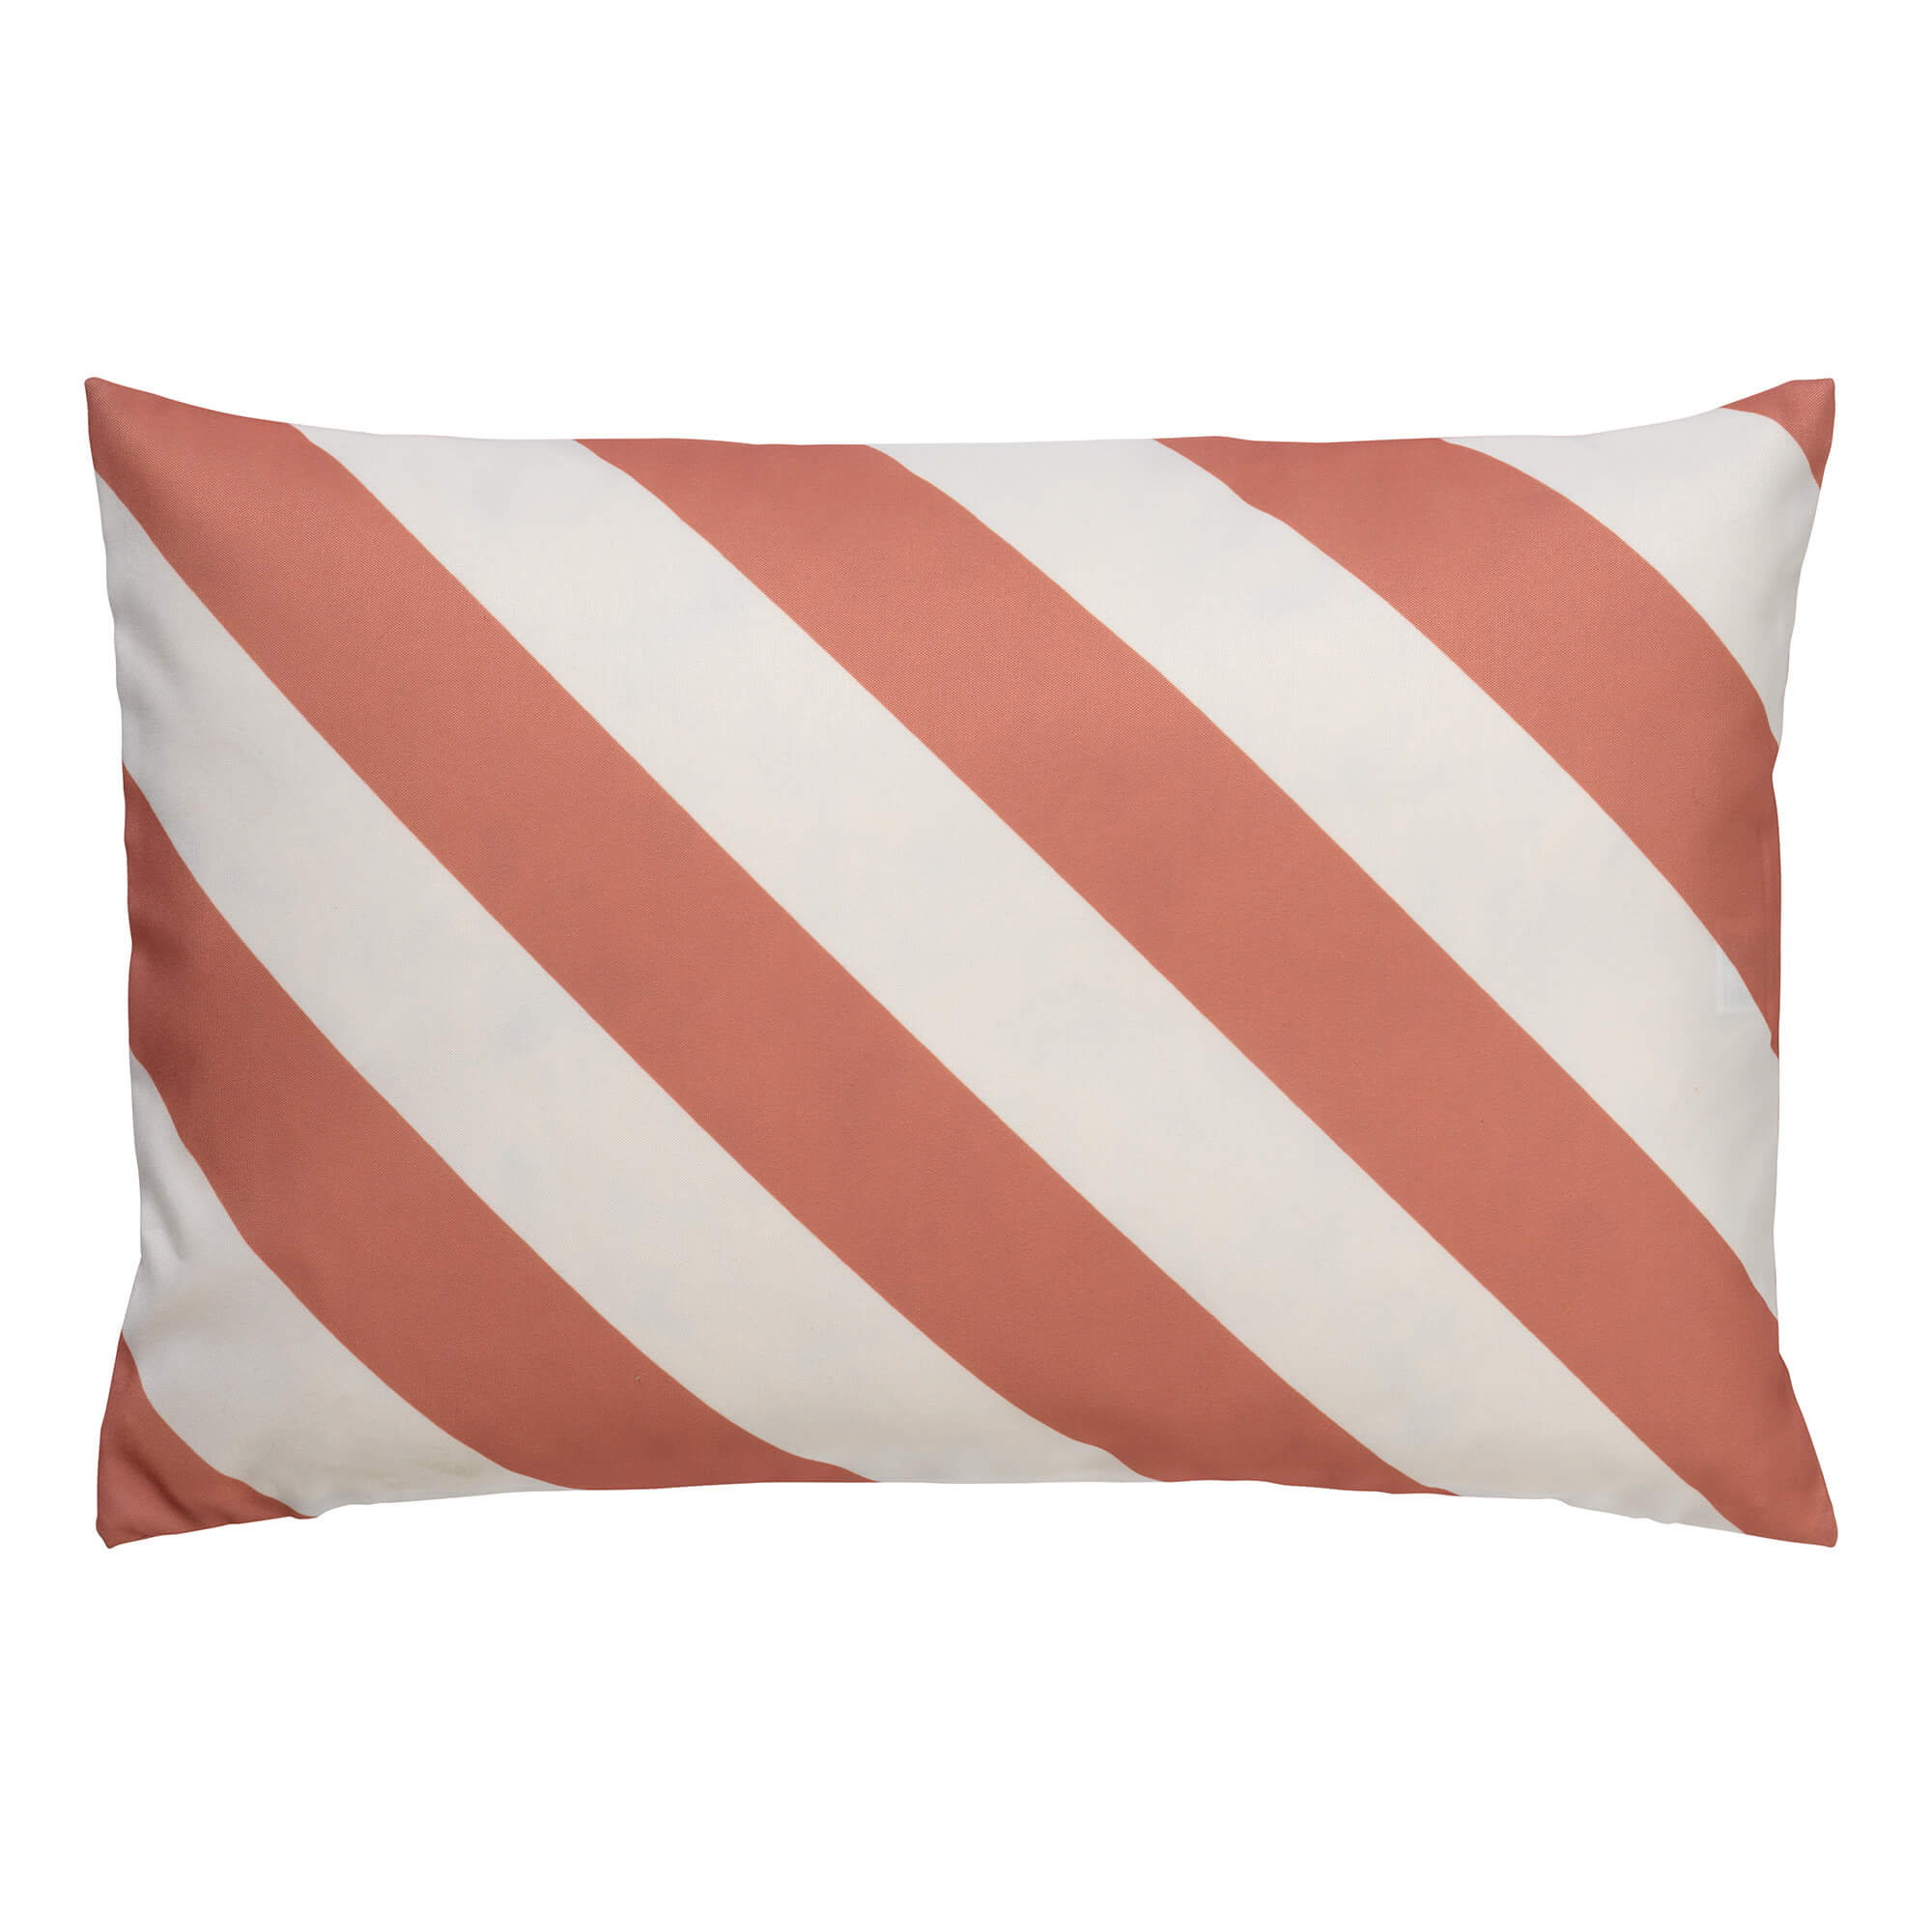 SANZENO - Outdoor Cushion 40x60 cm - waterproof & UV-resistant - Muted Clay - pink